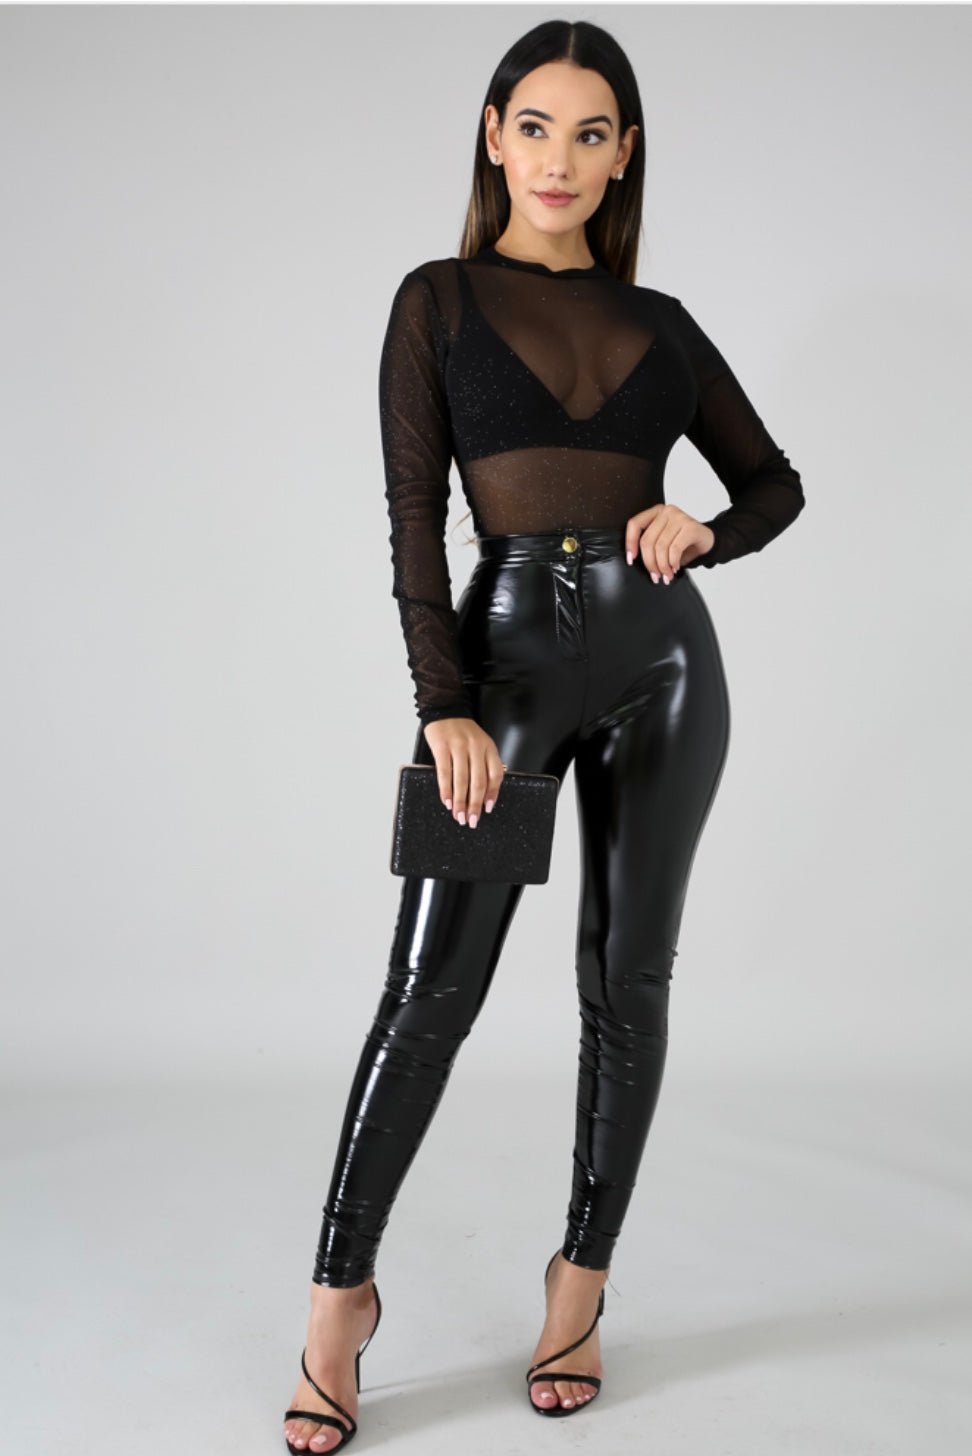 Shimmer Sheer Black Bodysuit - Ali’s Couture 